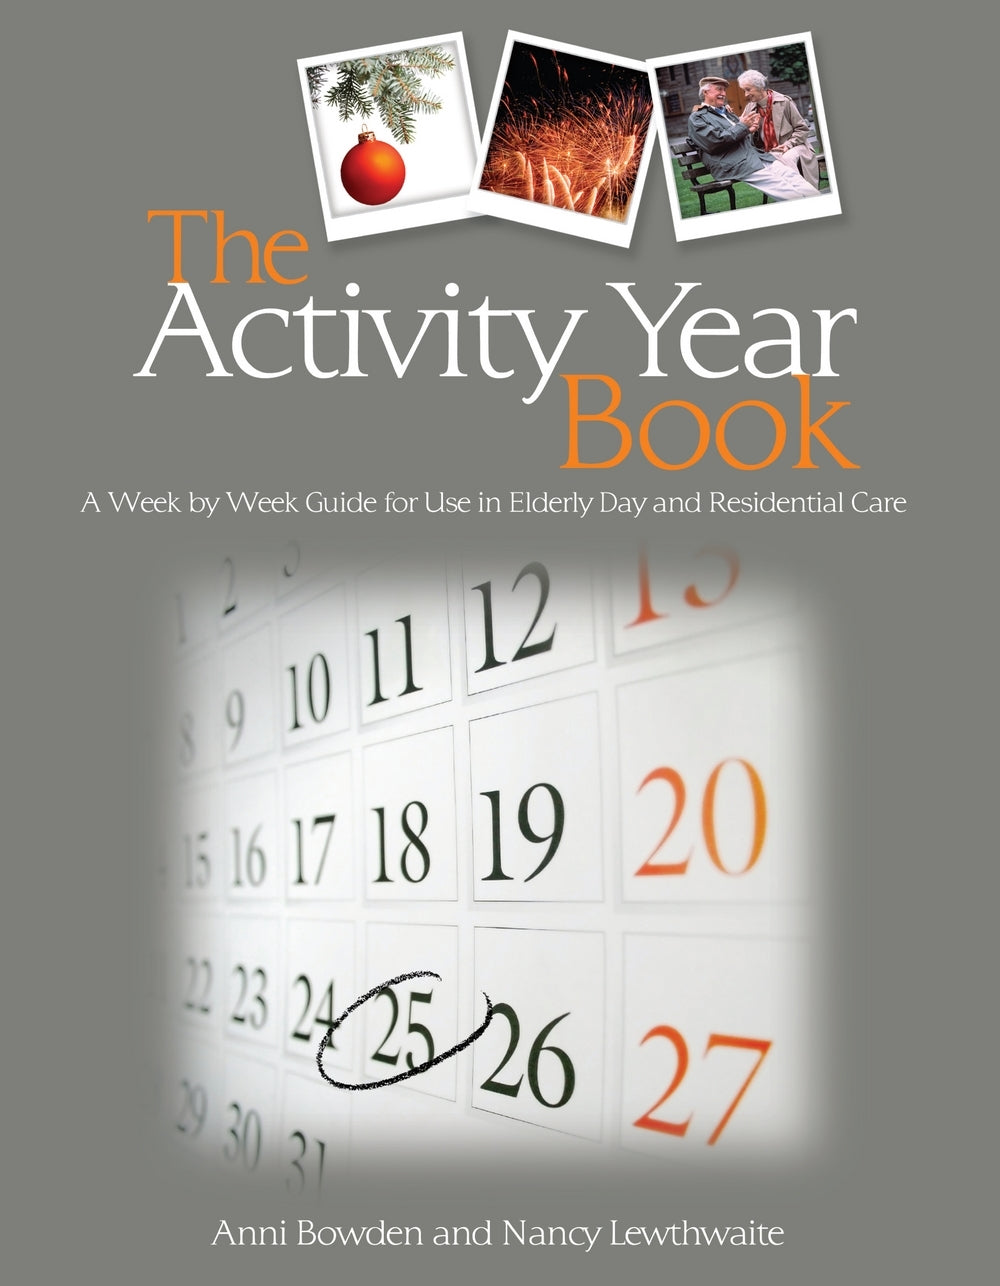 The Activity Year Book by Anni Bowden, Nancy Lewthwaite